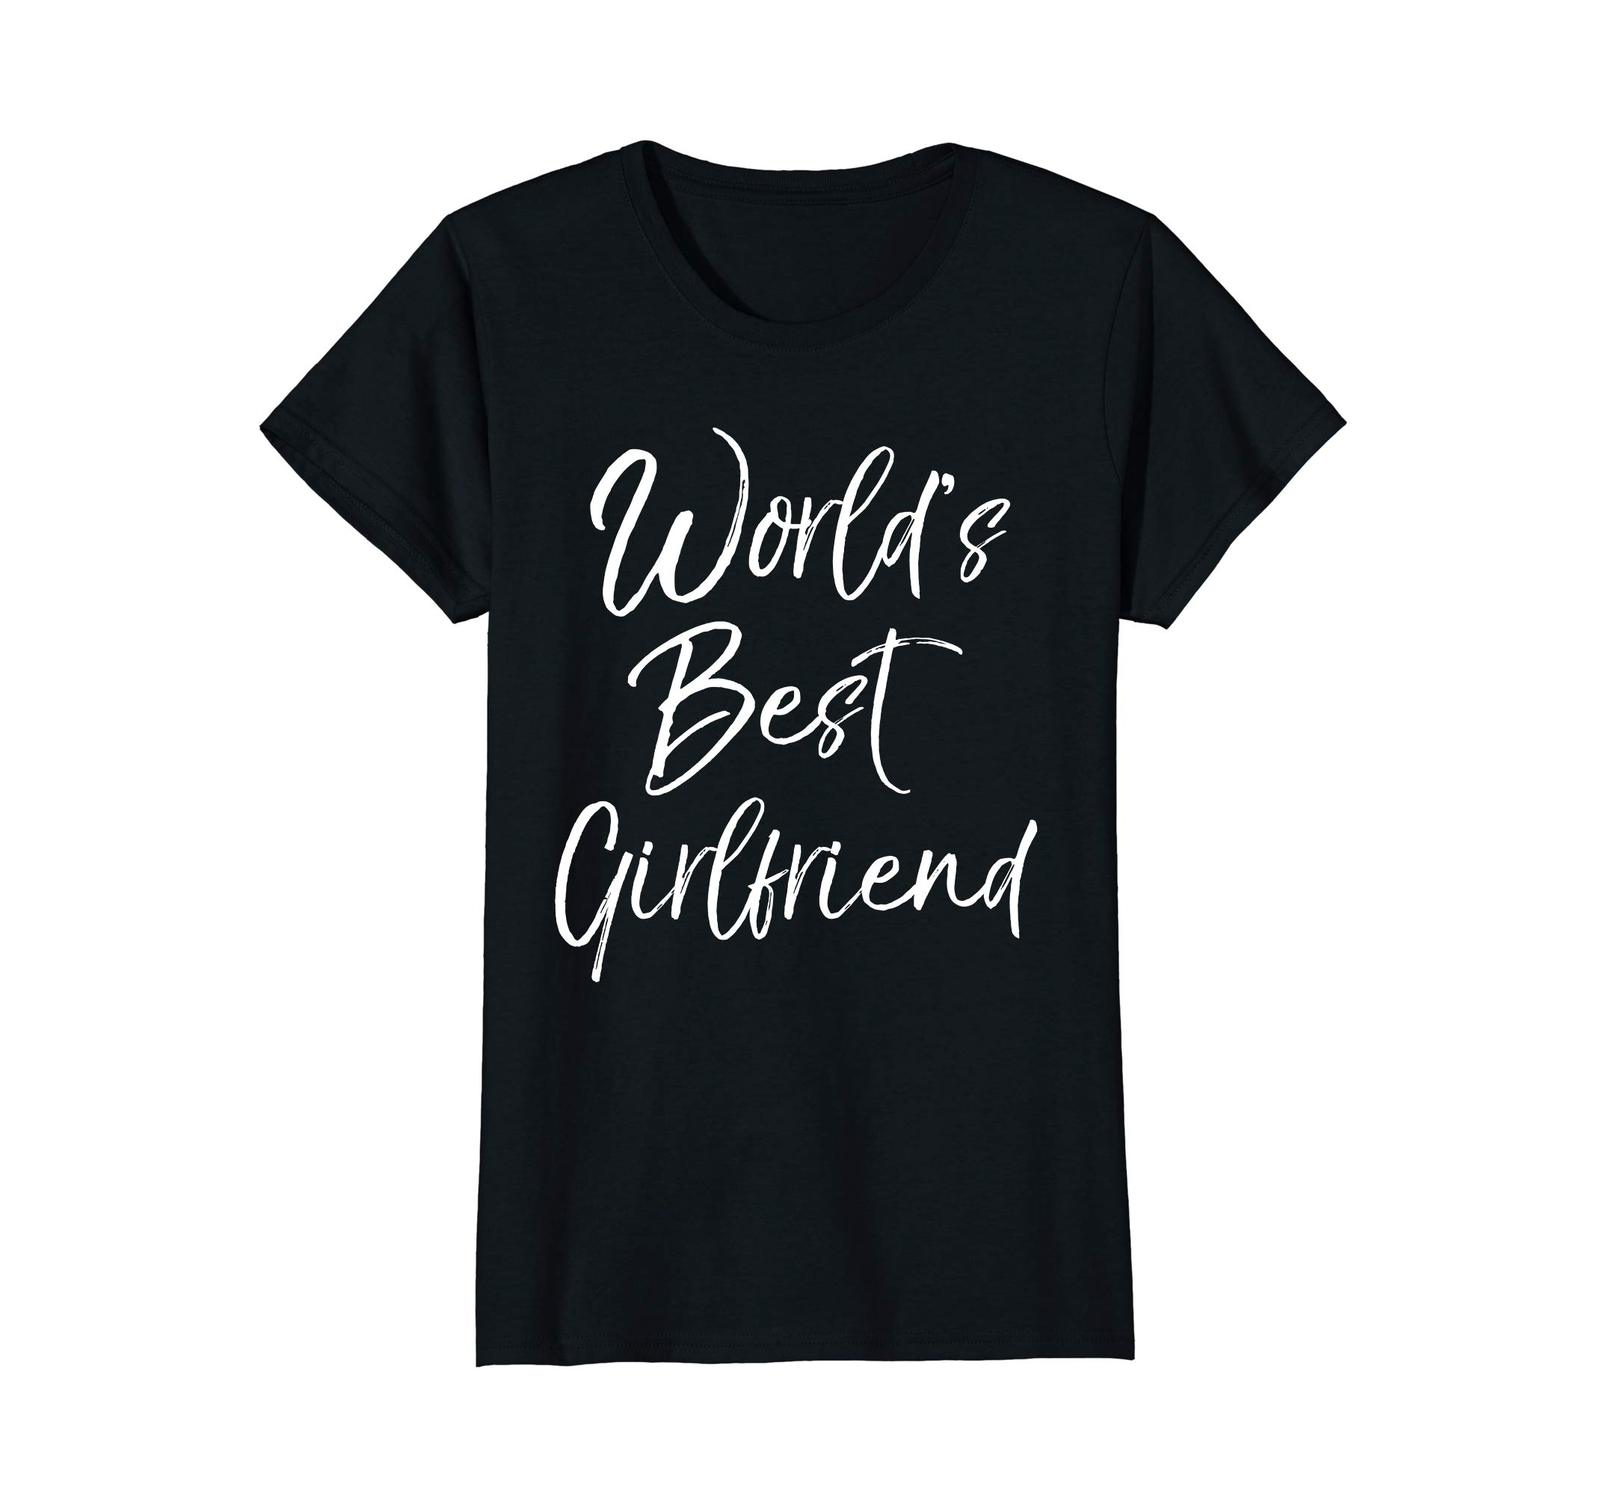 Dog Fashion - World's Best Girlfriend Shirt Fun Cute Valentine's Gift Tee Wowen